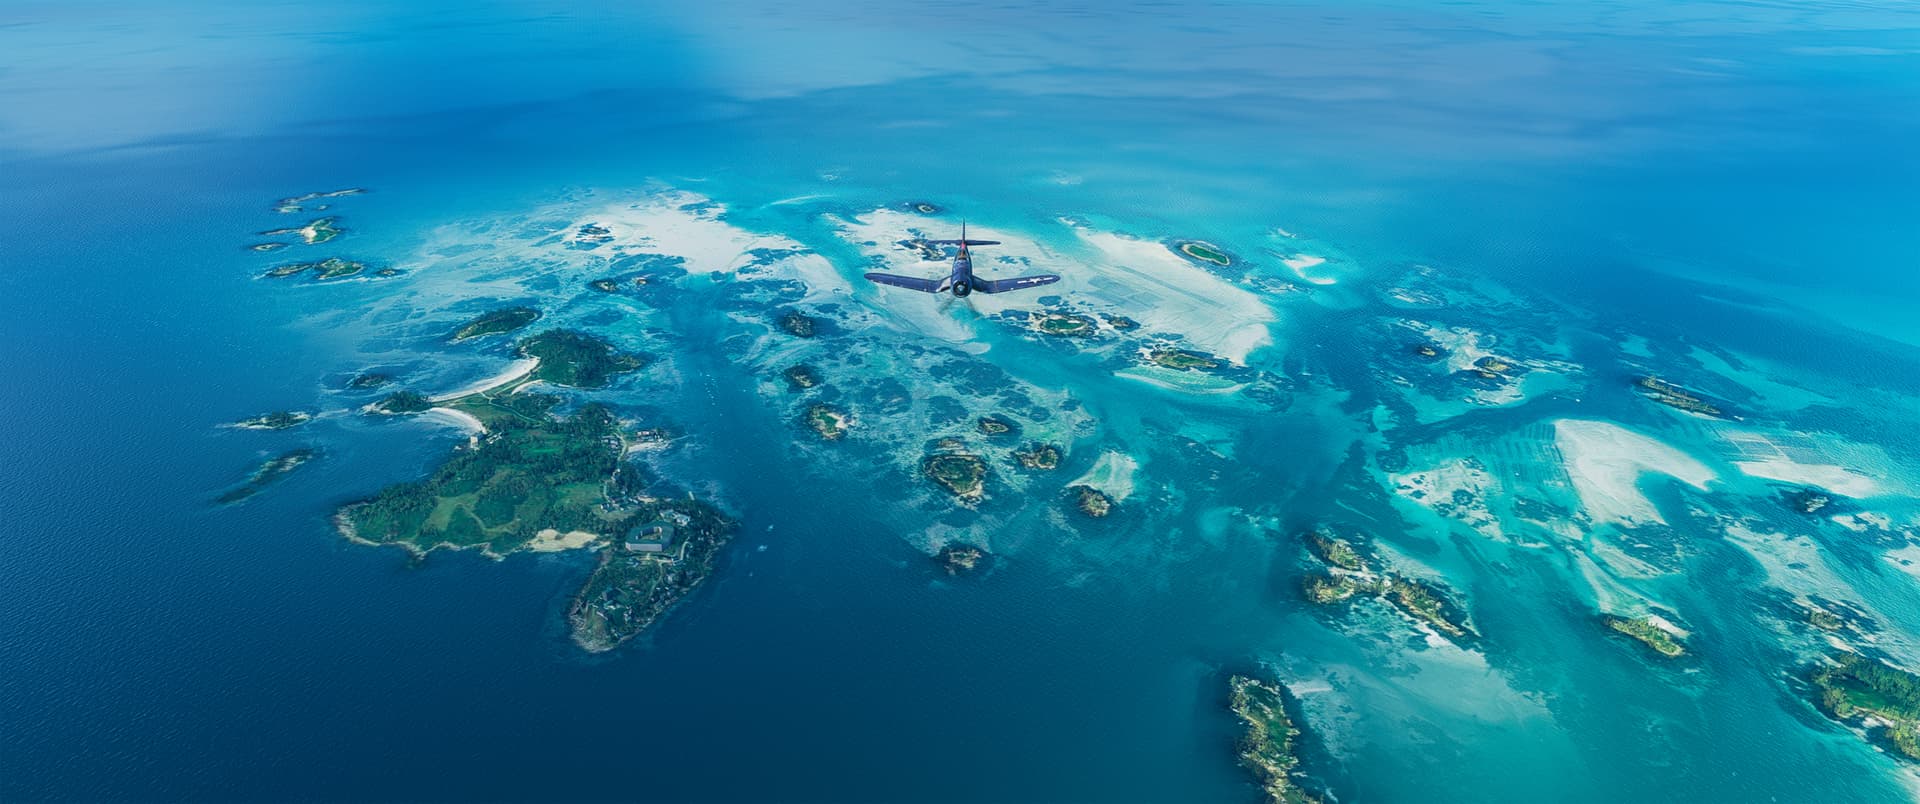 A Vought F4U Corsair flies over a small archipelago with several green islands against a light blue ocean backdrop.